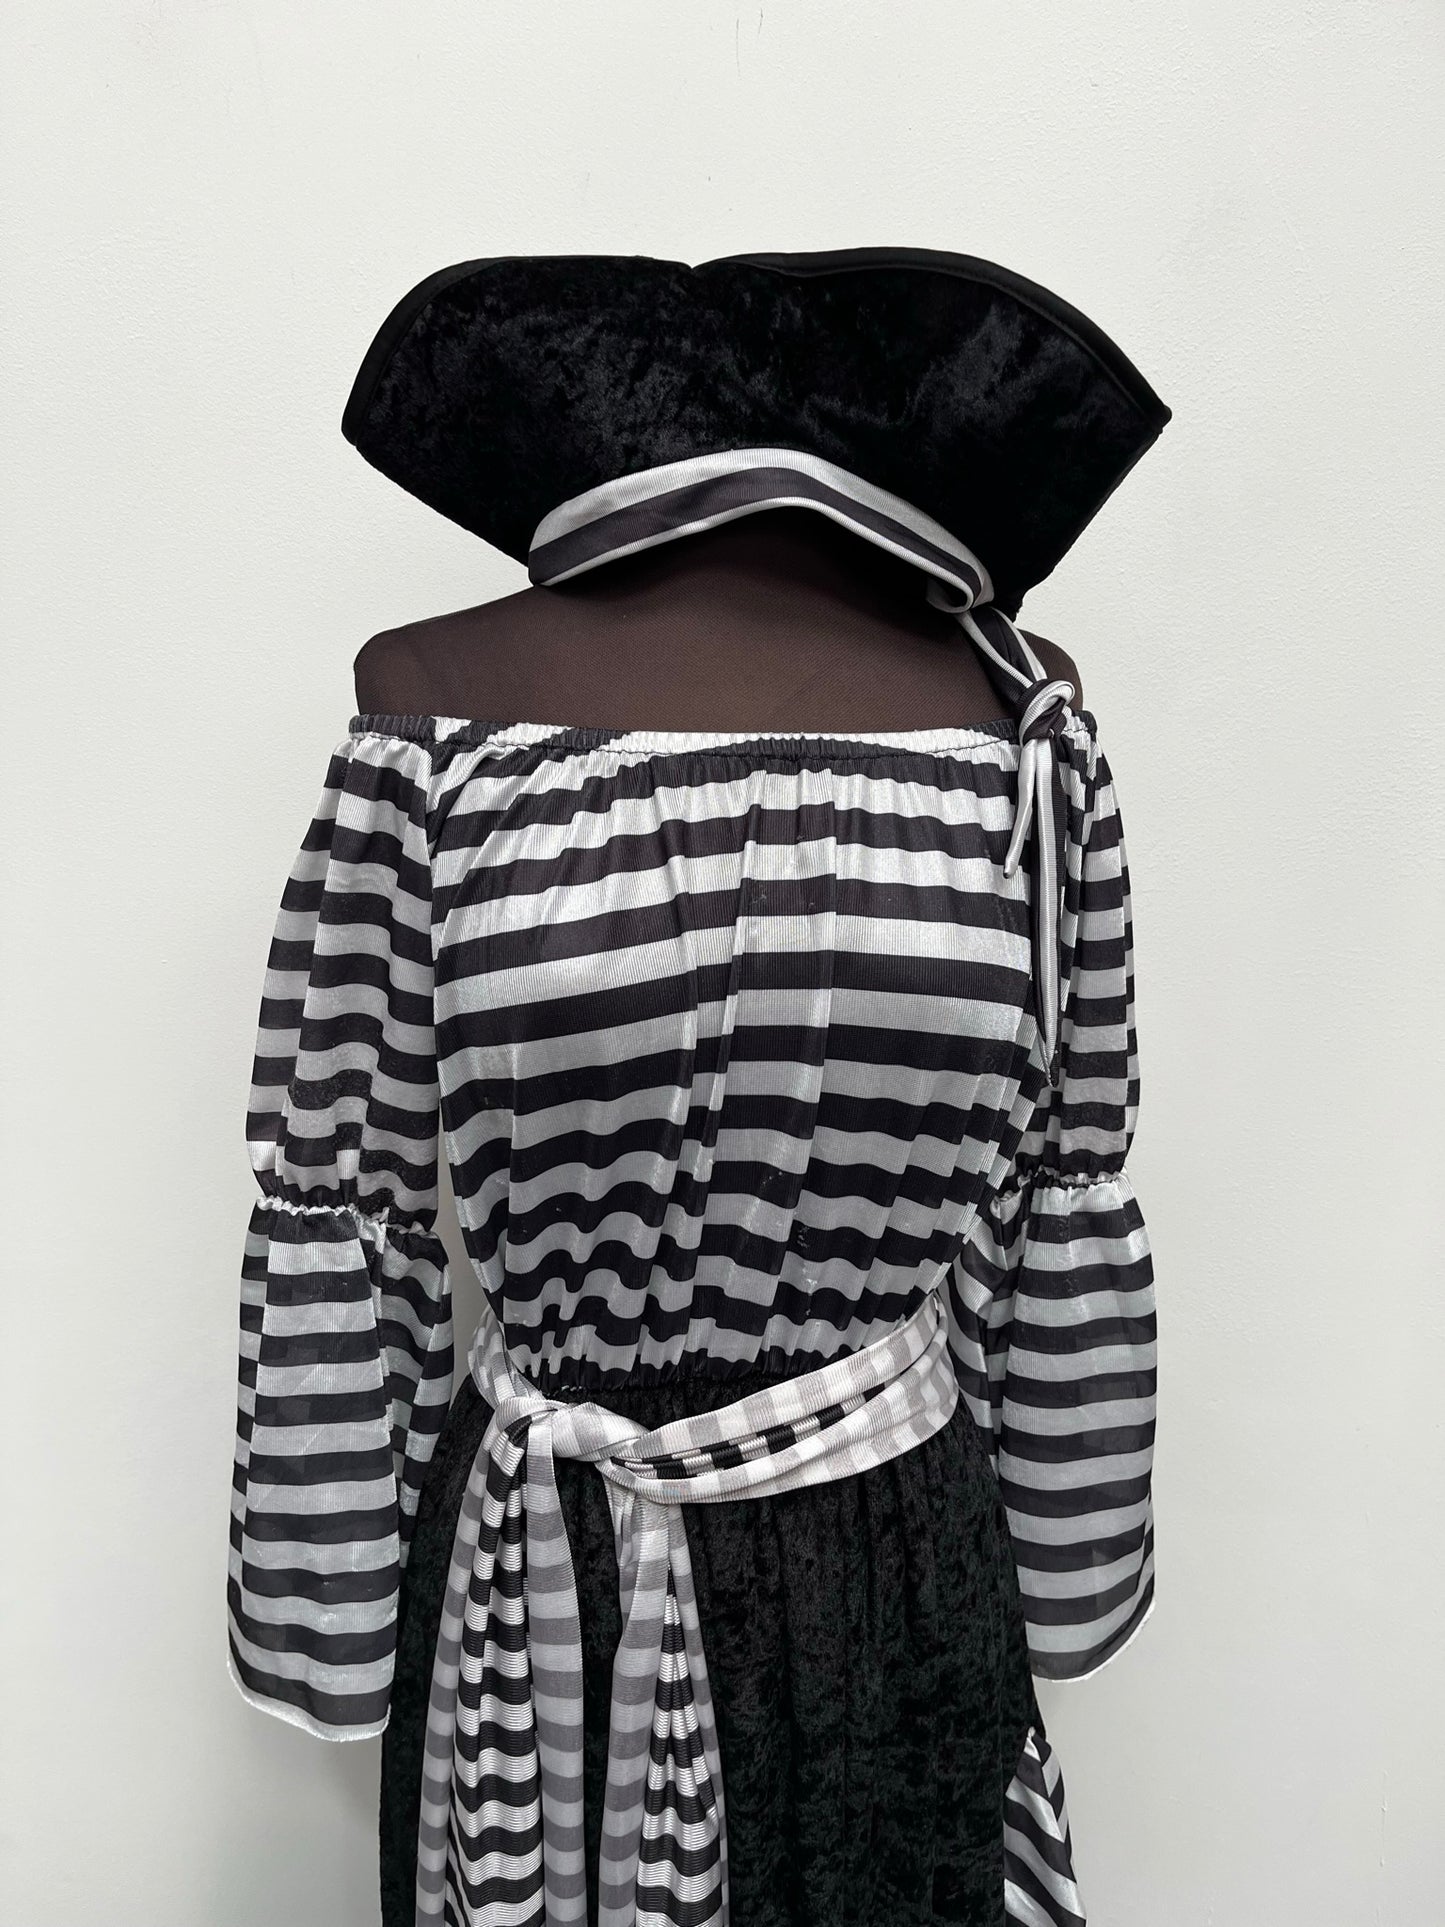 Lady Black White Pirate Costume One Size - Ex Hire